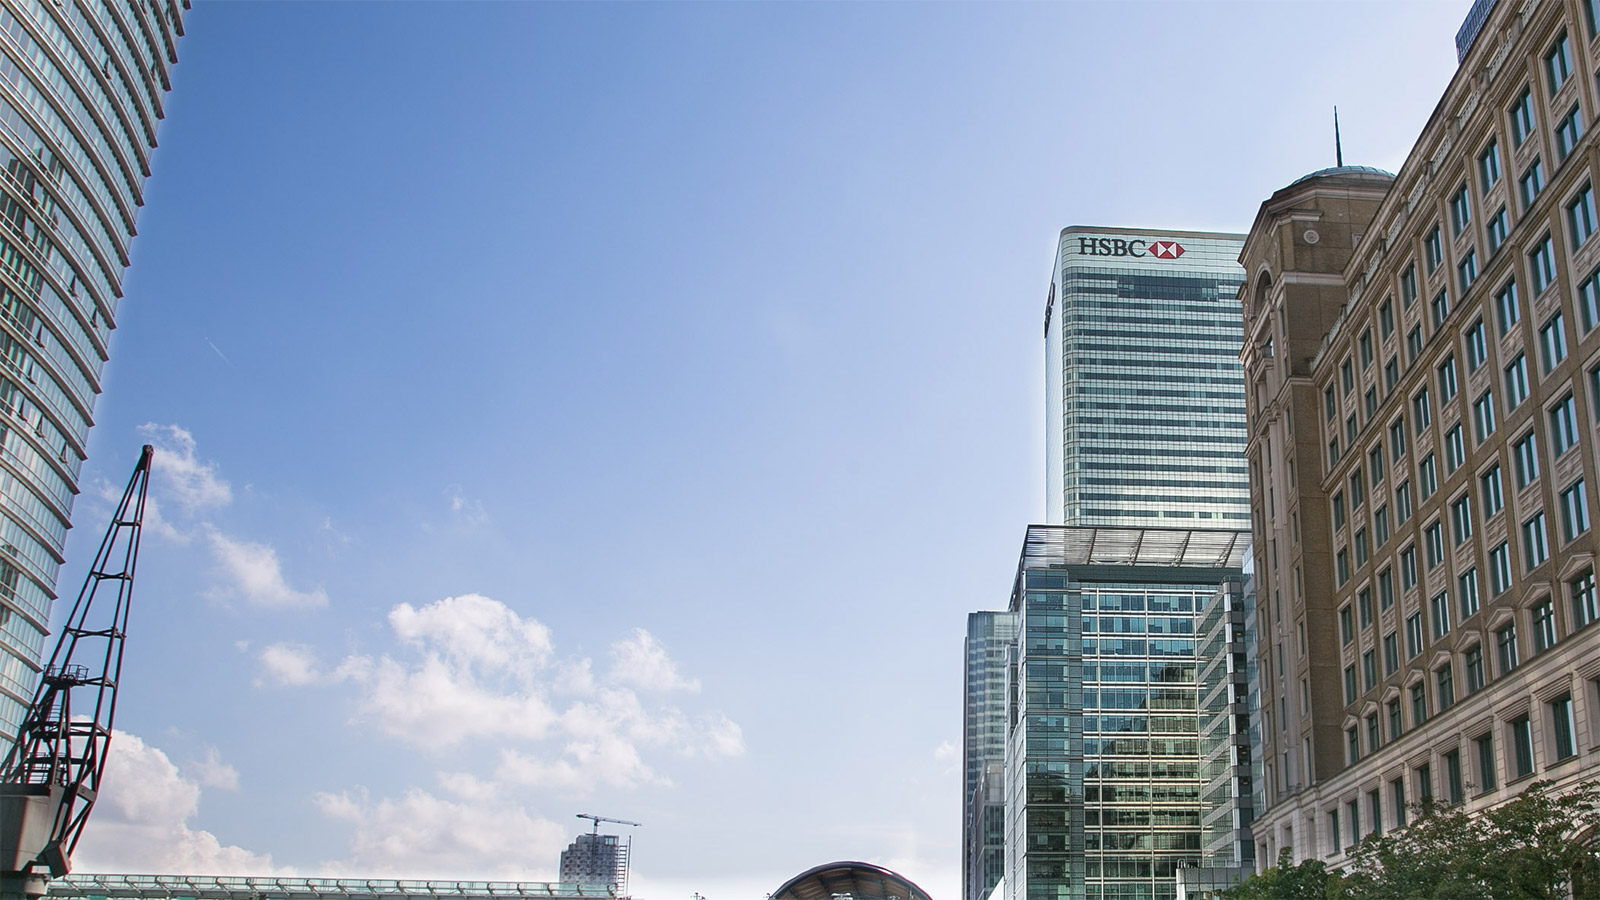 HSBC’s headquarters in Canary Wharf, London